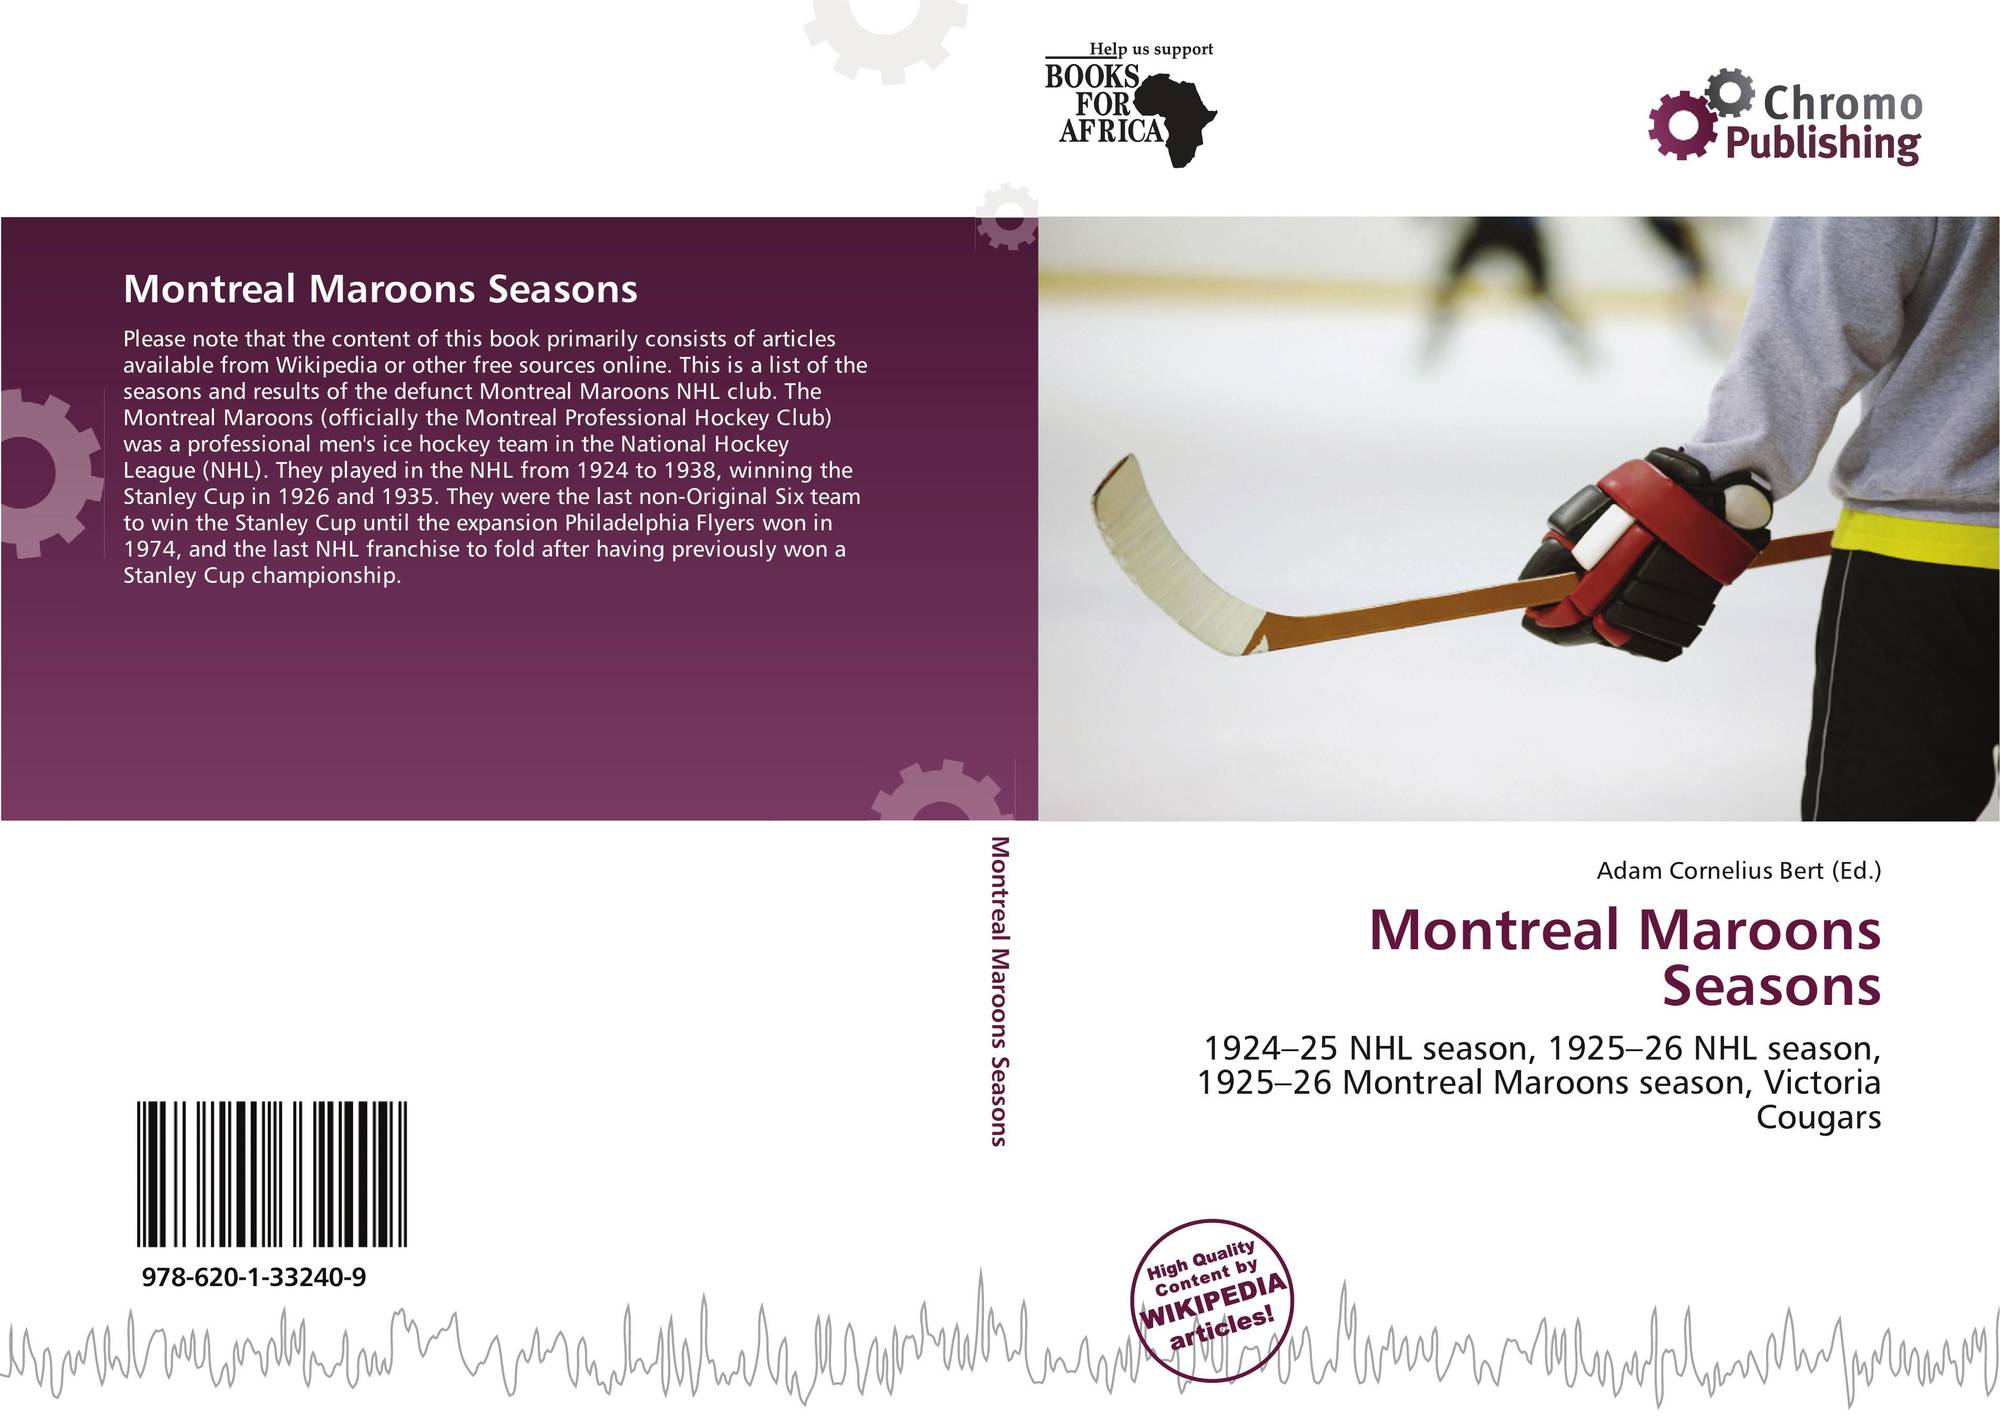 Montreal Maroons - Wikipedia